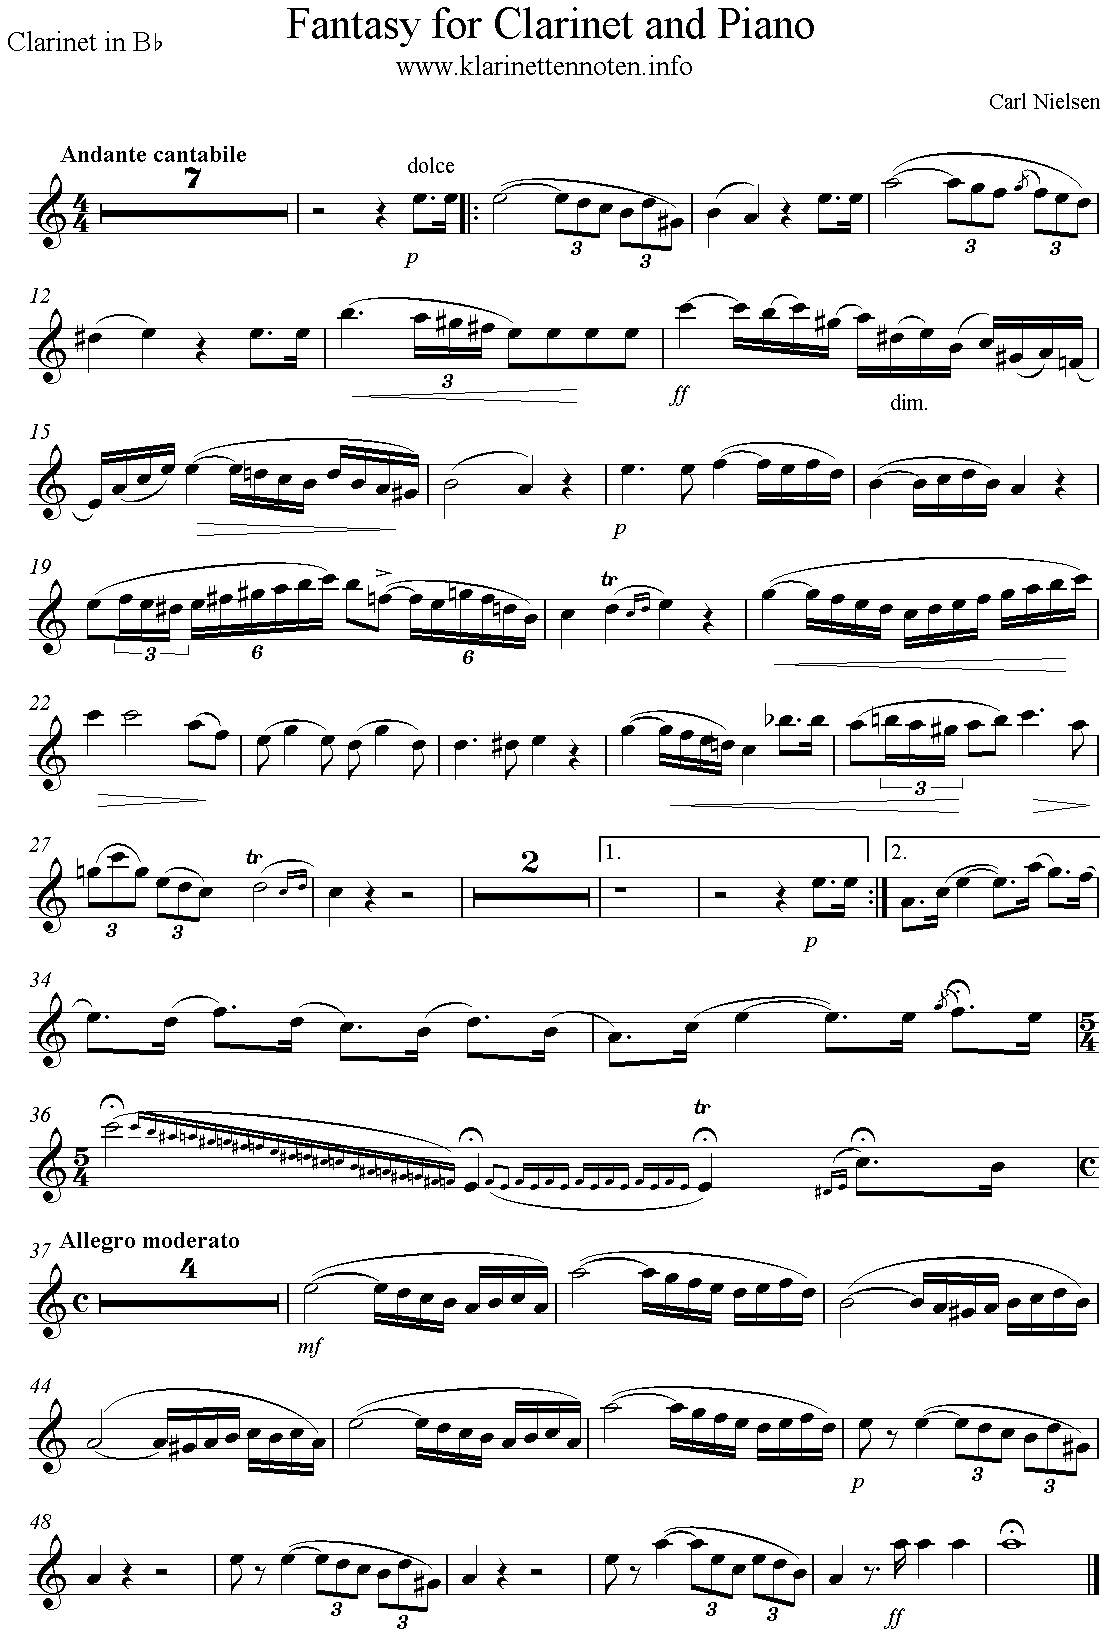 Clarinet Part - Carl Nielesn , Fantasy for Clarinet